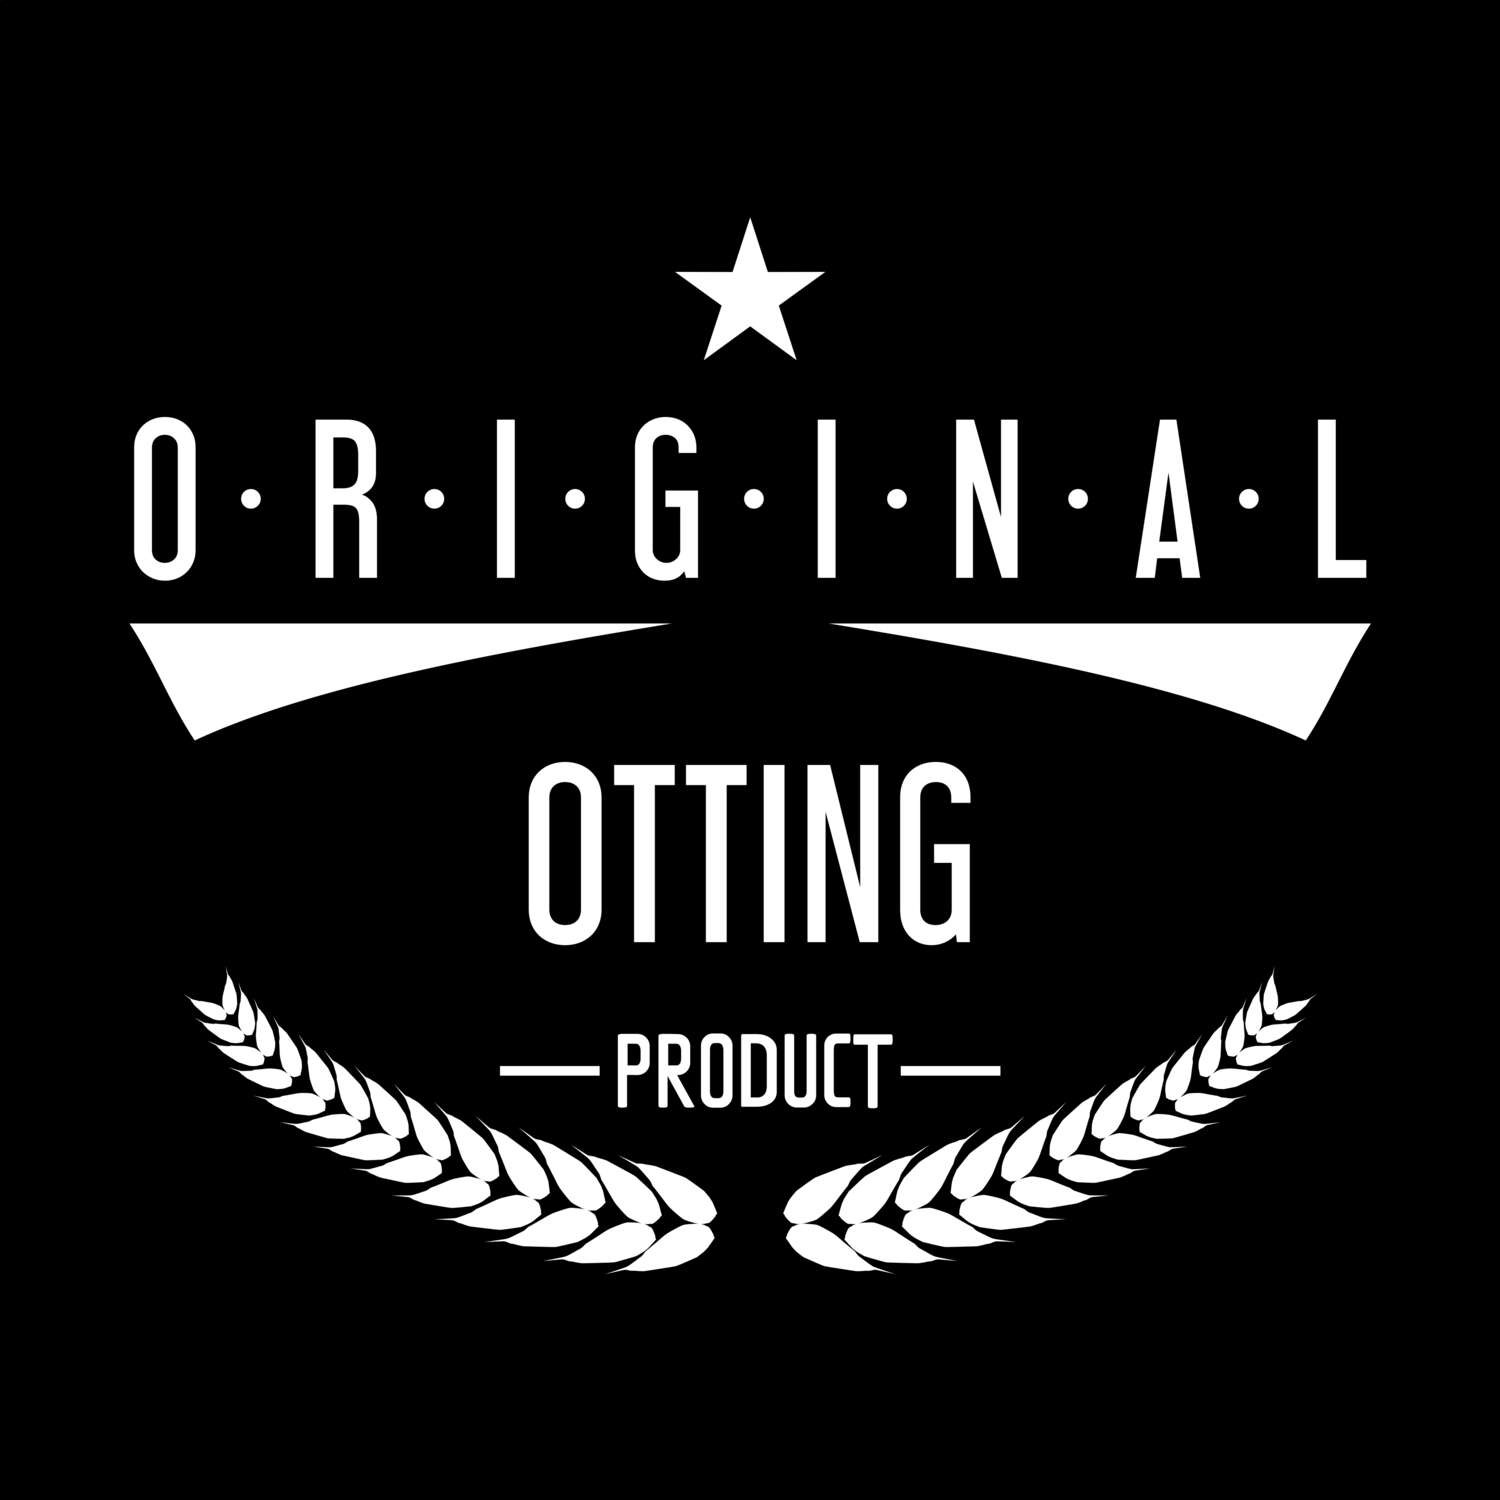 Otting T-Shirt »Original Product«